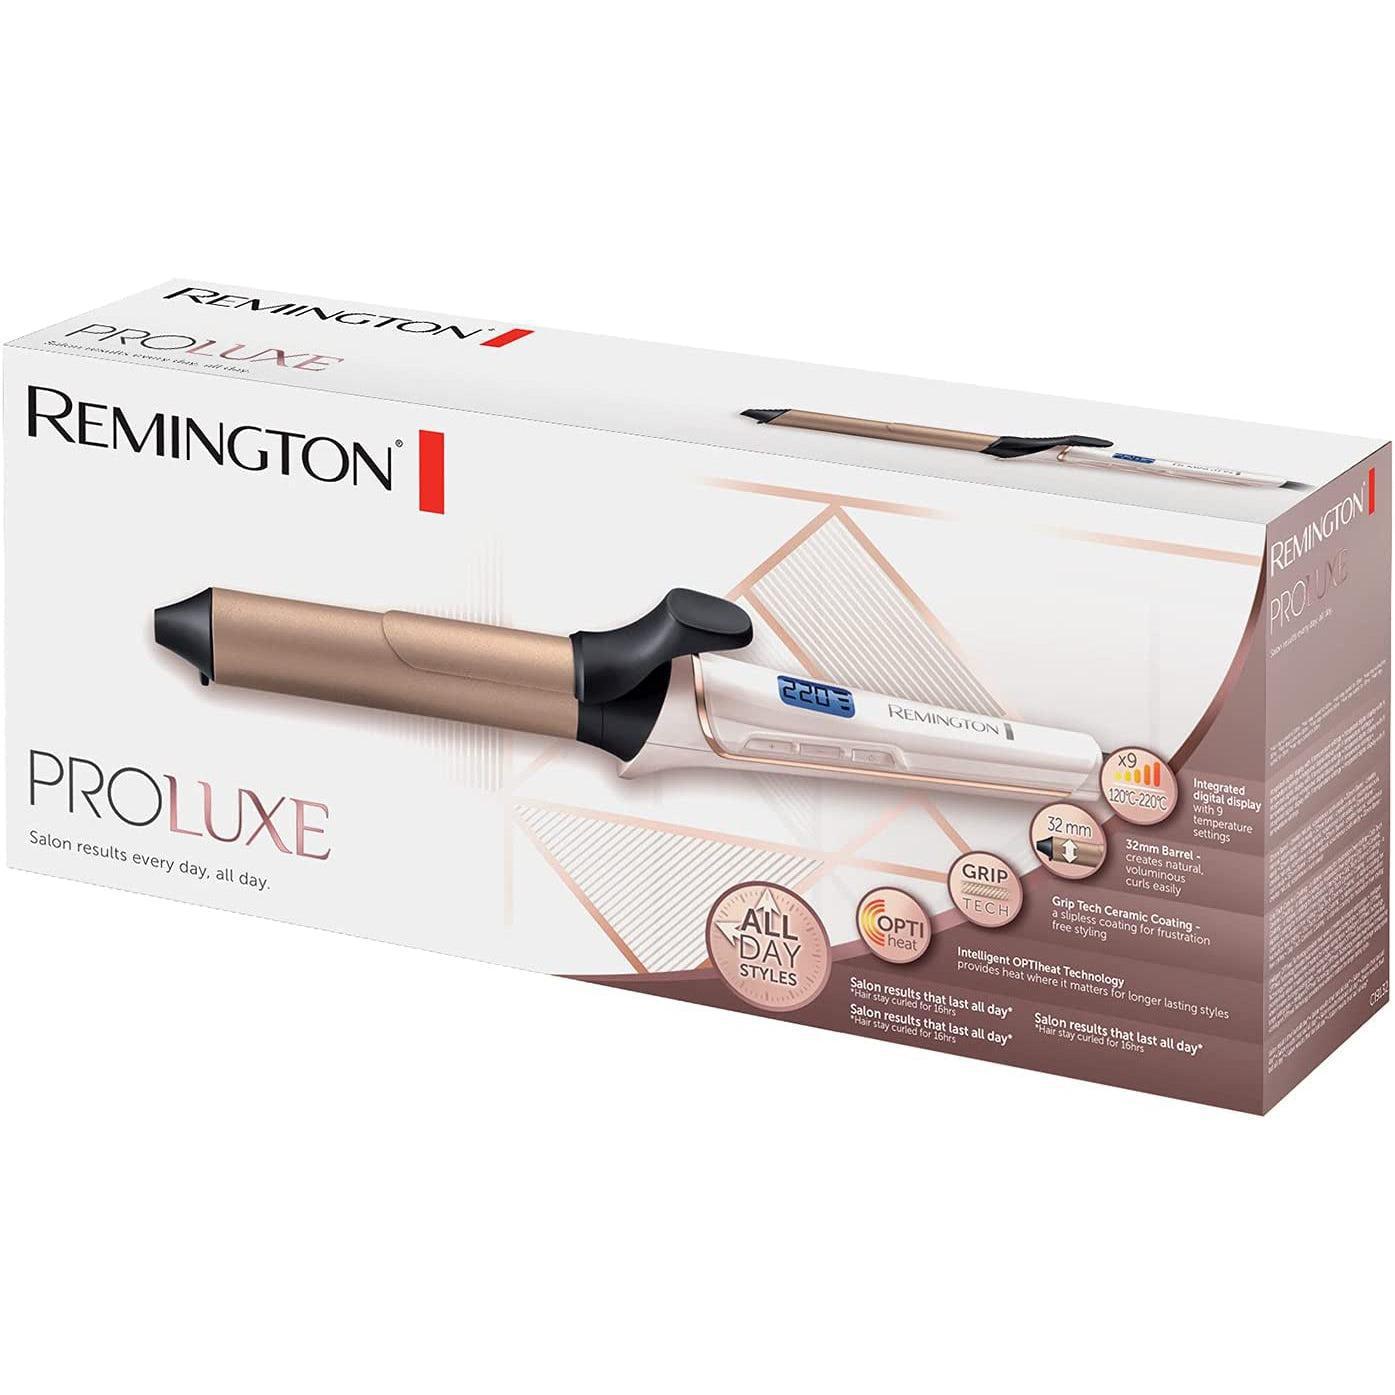 Remington Proluxe Large Barrel Curling Hair Tong, 32 mm Barrel - CI9132, Pearl - Healthxpress.ie